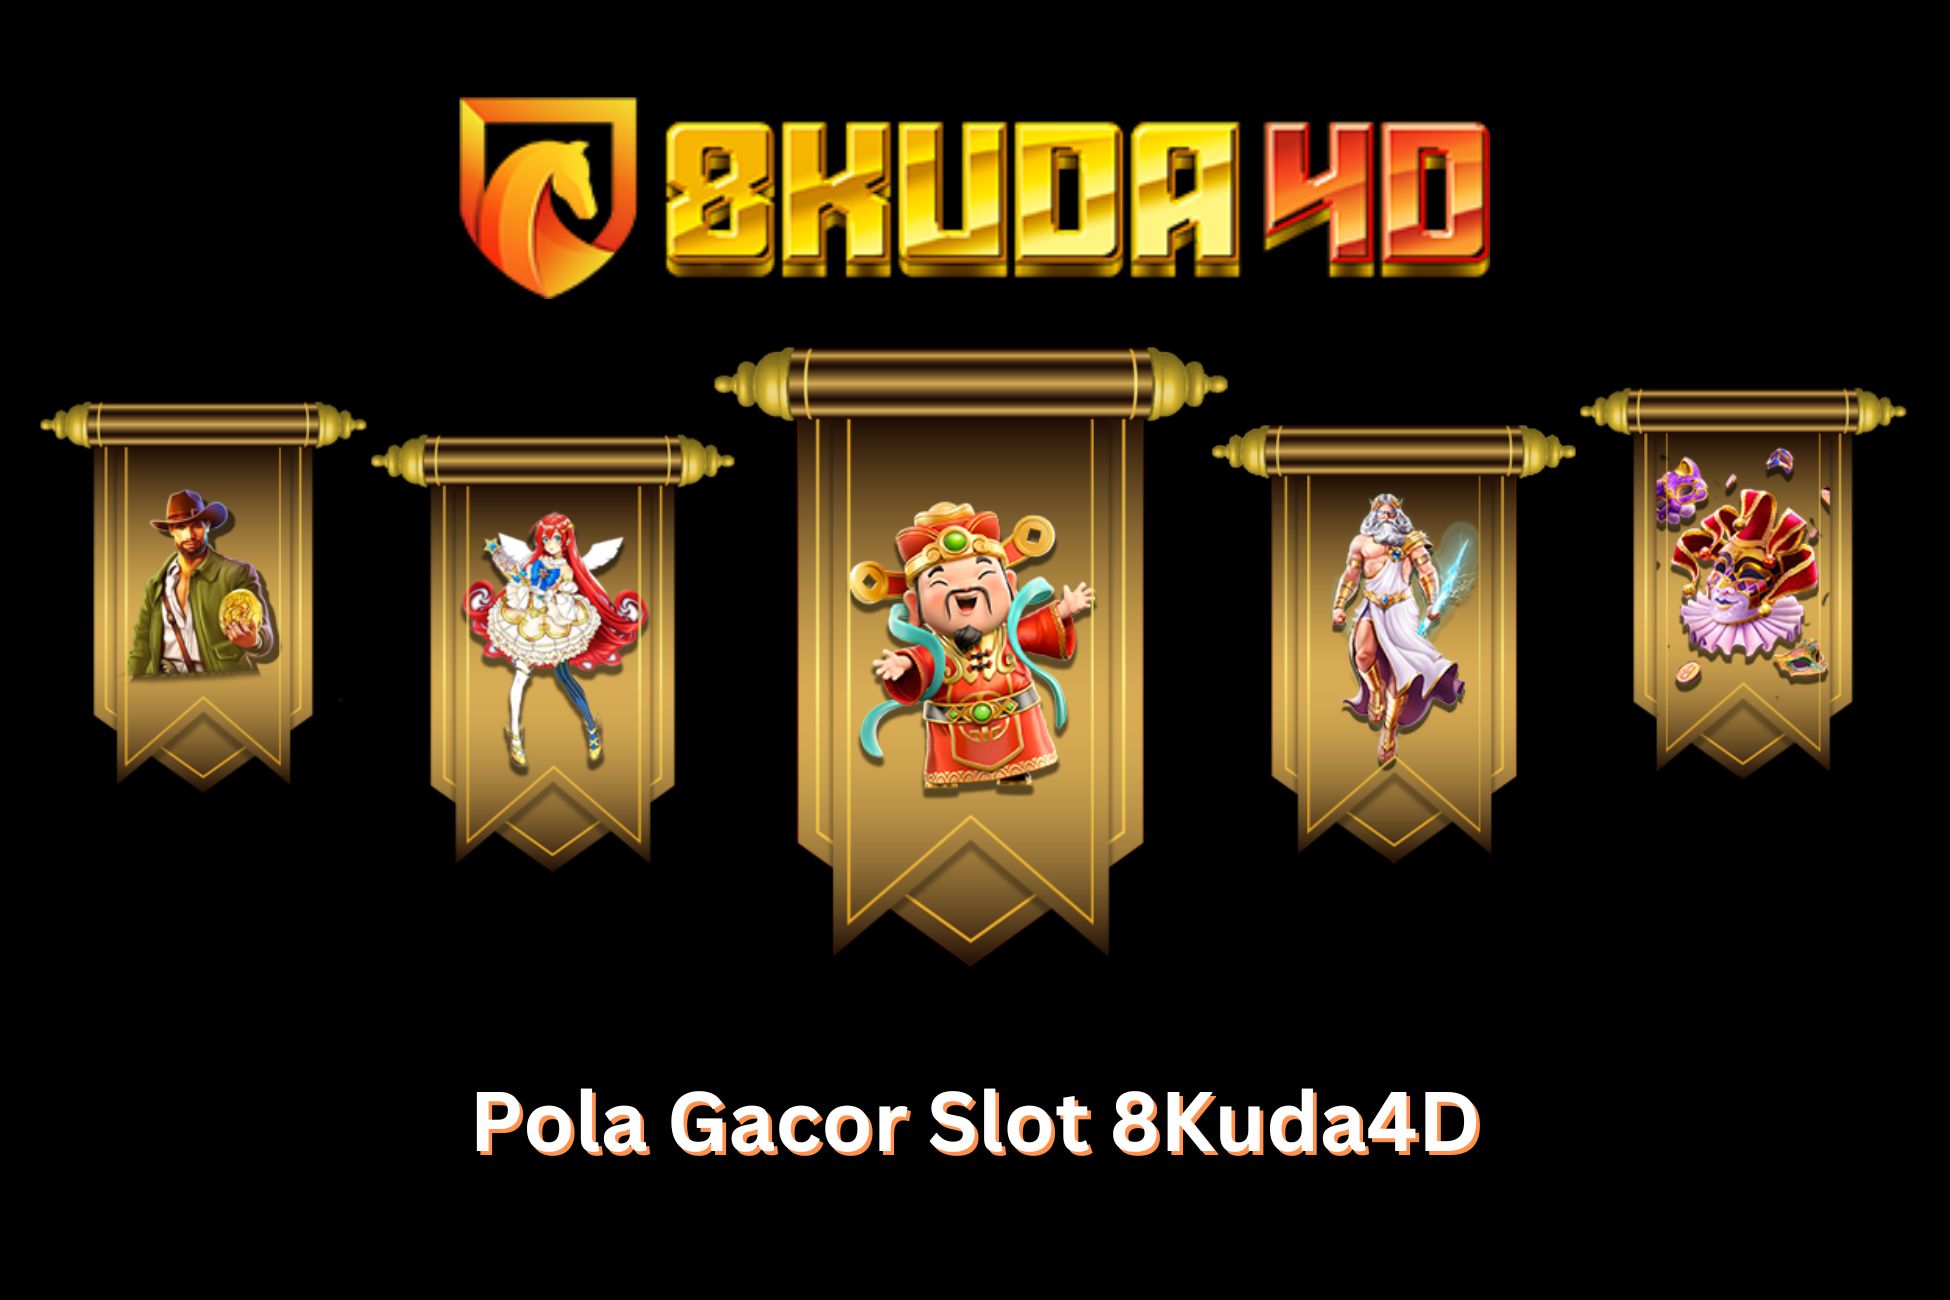 Pola Gacor Slot 8Kuda4D